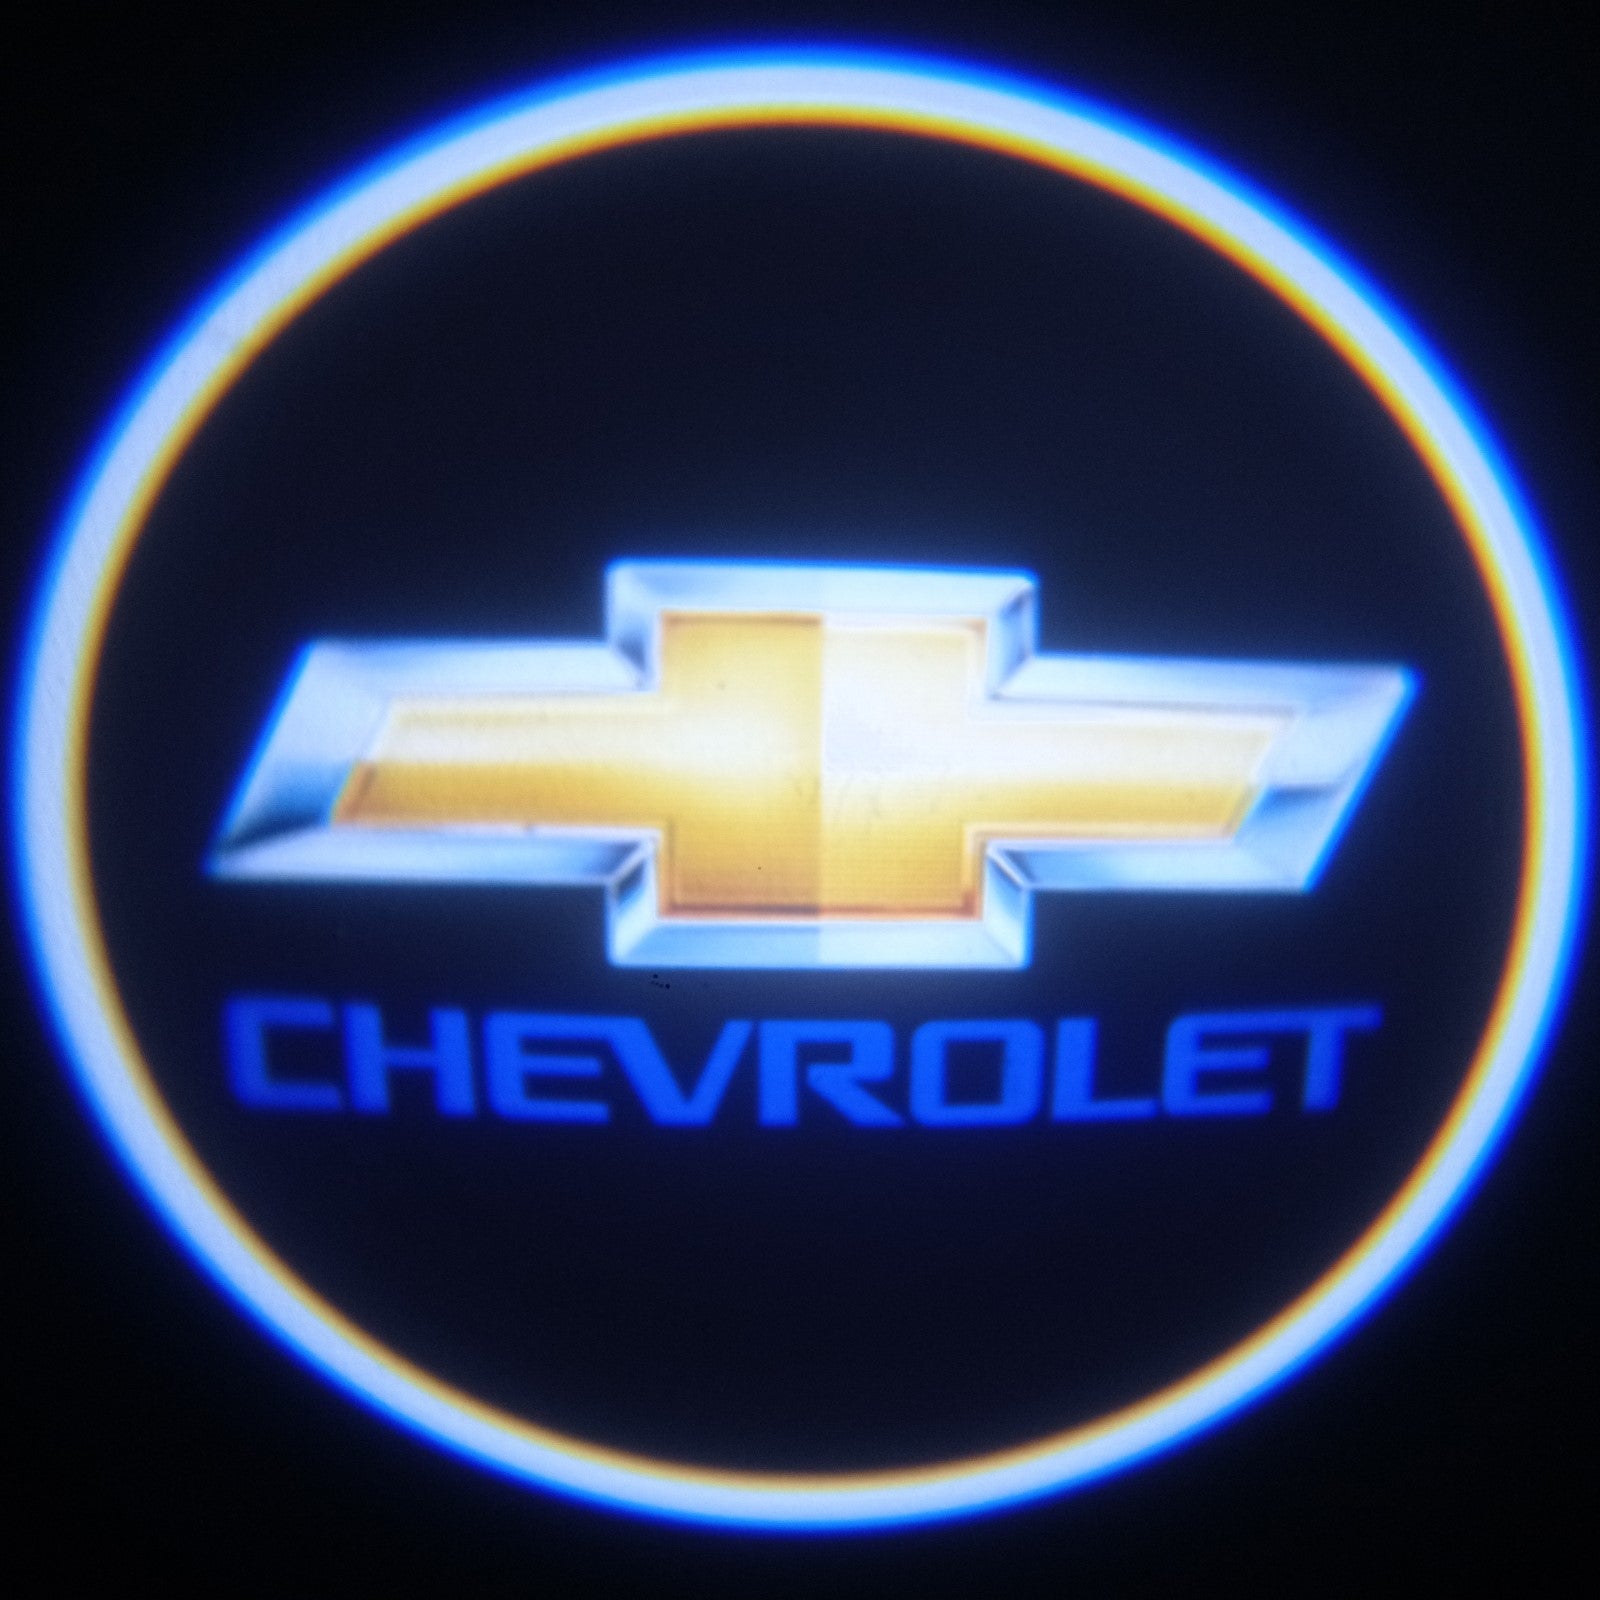 Luzes Cortesia com Logotipo marca Chevrolet